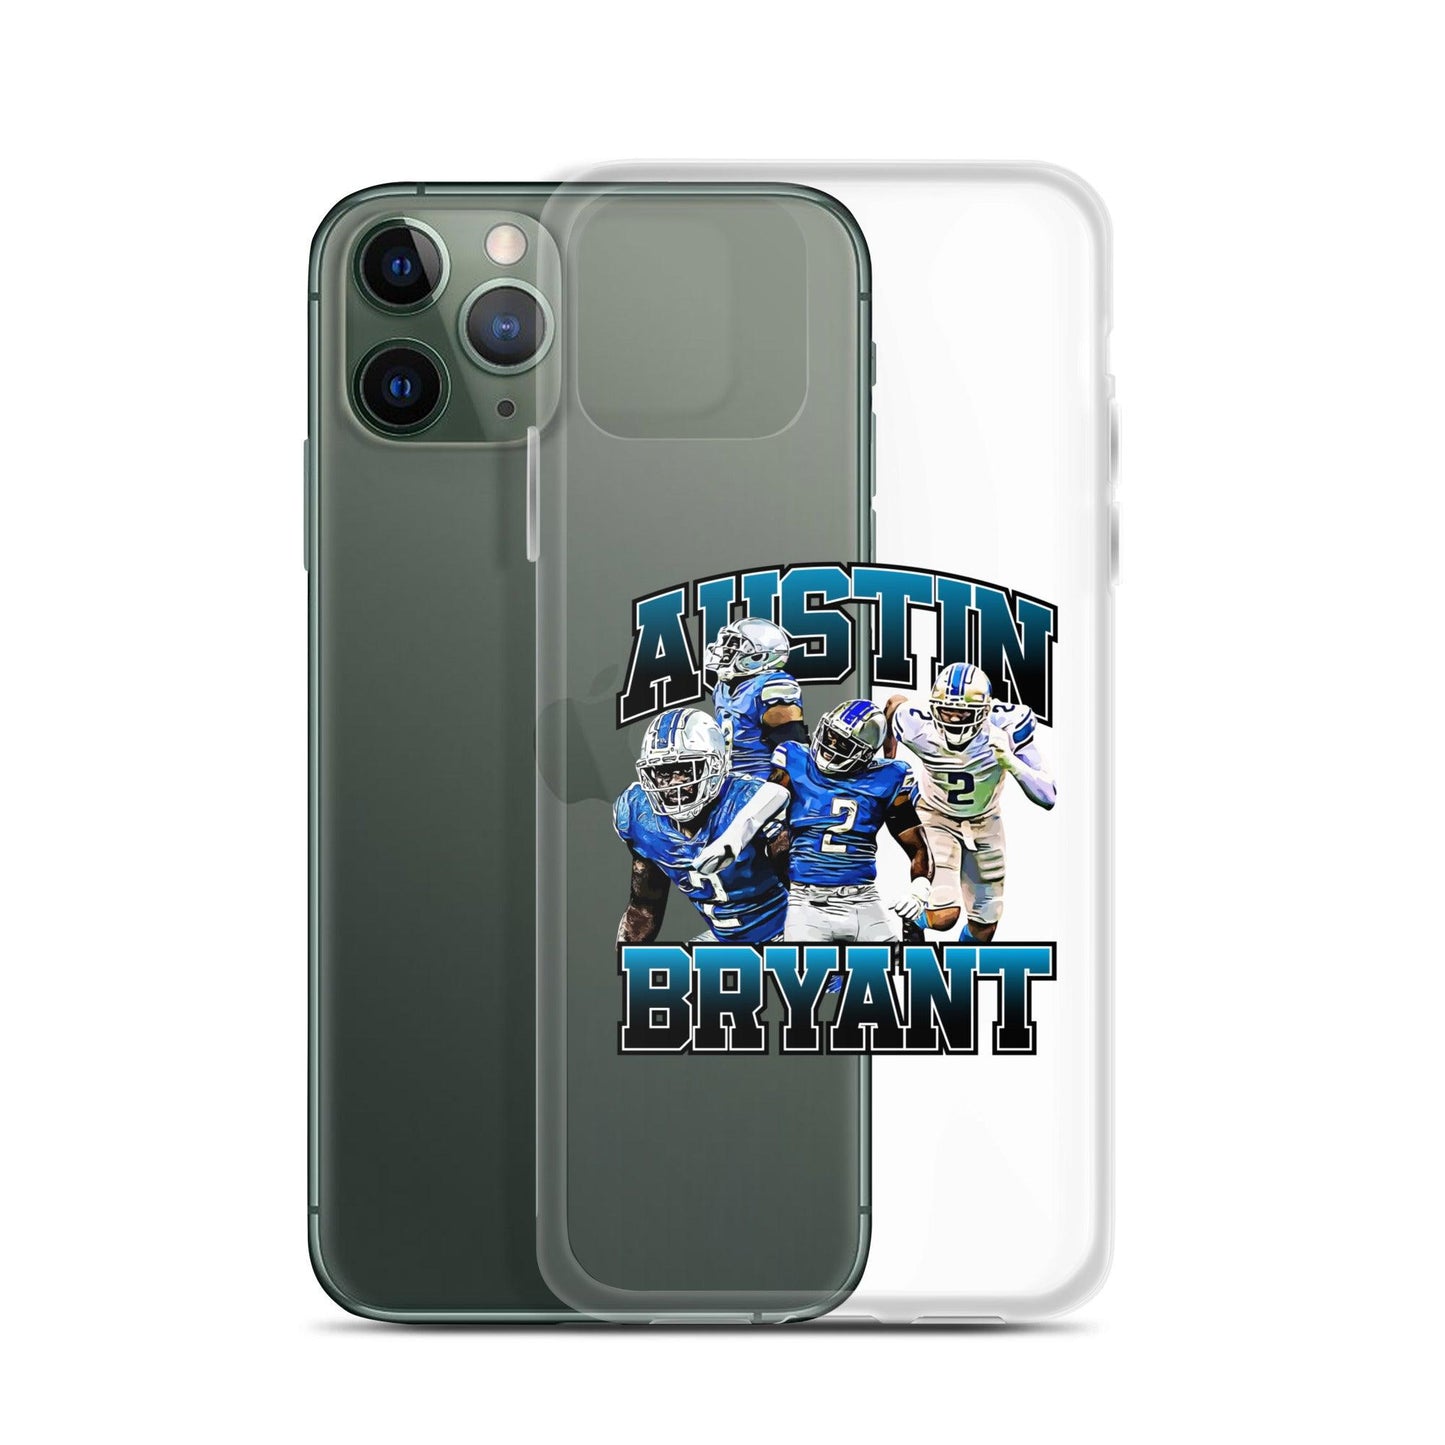 Austin Bryant iPhone Case - Fan Arch